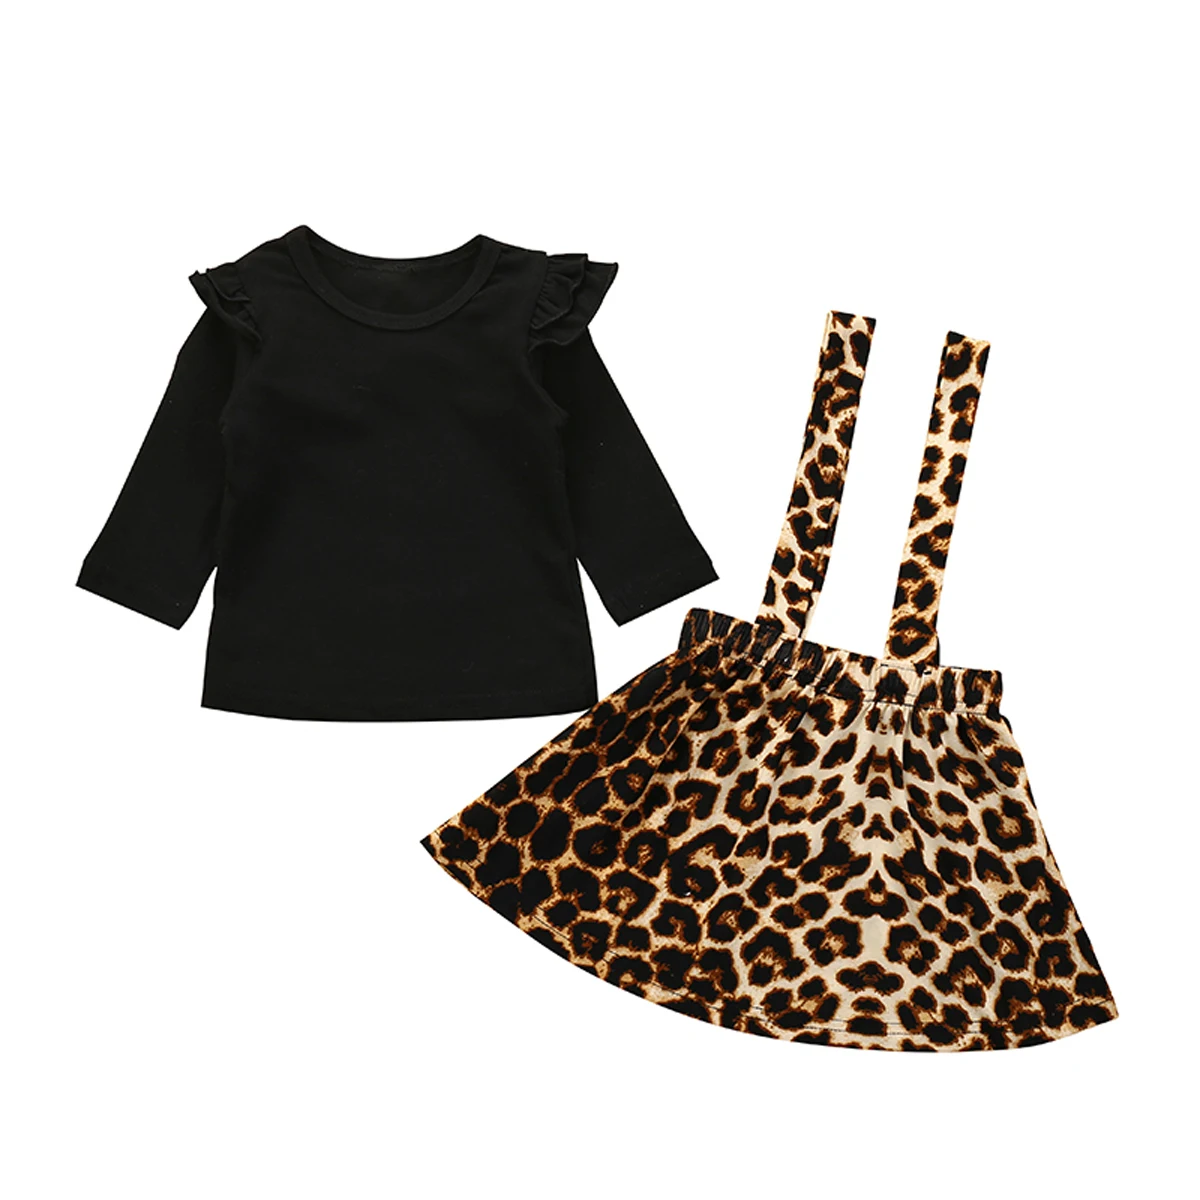 Mode Kjole til Baby Piger 6M-5T Lange Ærmer Hofteholder Toppe Leopard kjole Print Hofteholder kjole Outfits Set i vinter 3